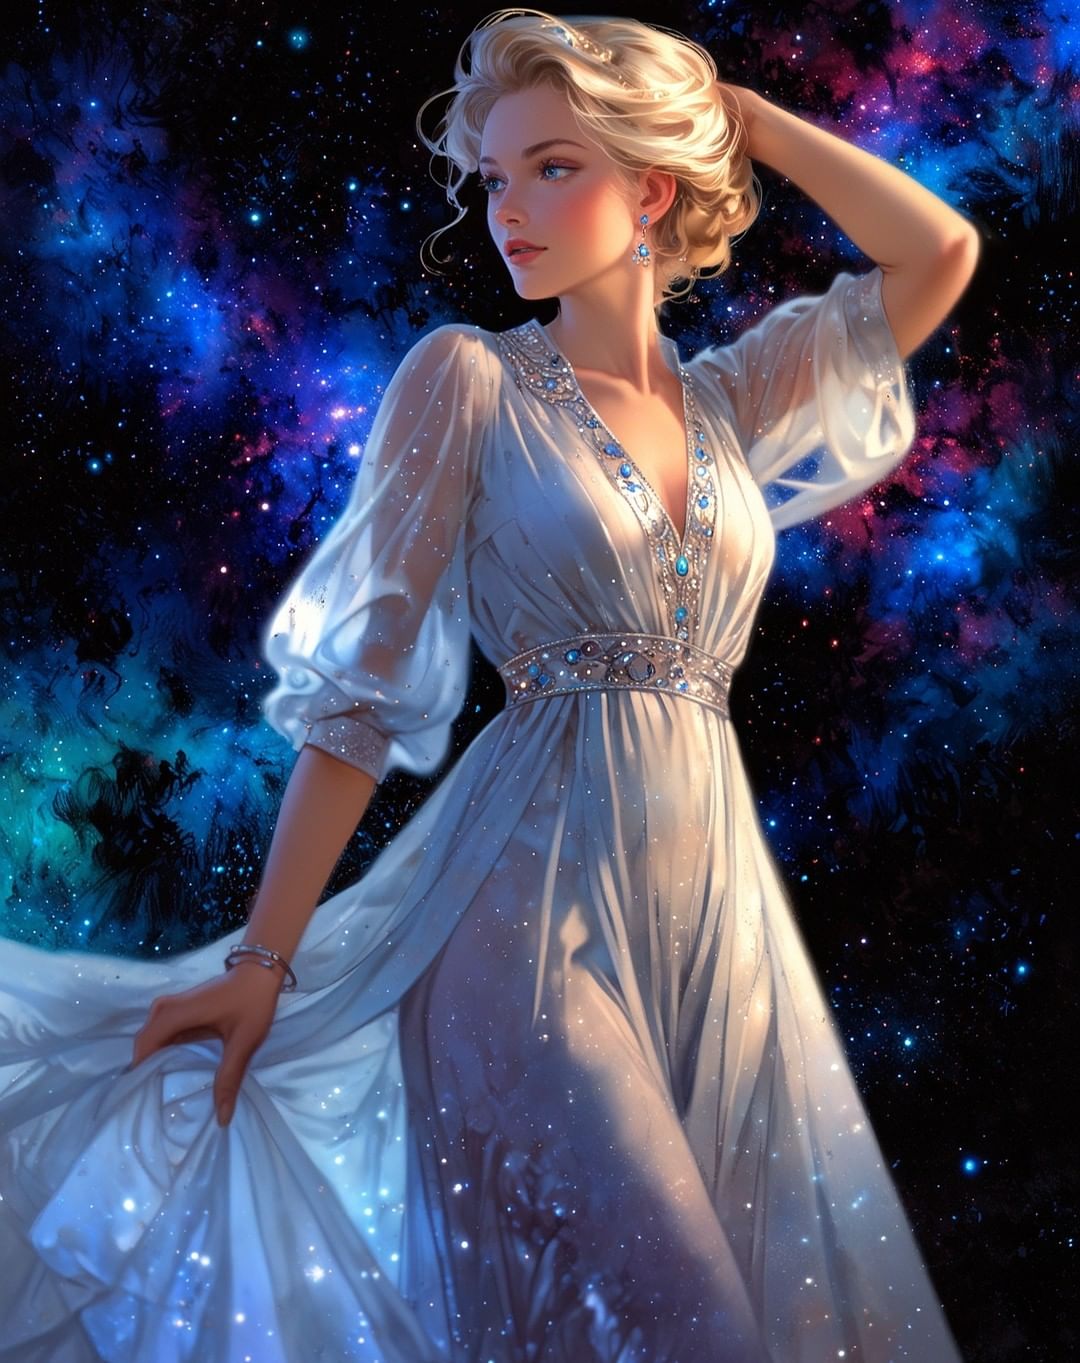 background-depicts-a-starry-sky-with-beautiful-galaxiesimagegenerationaiaiartaiartworkaiartcommunityLeonardoAiaiaiaiaiai-3.jpg